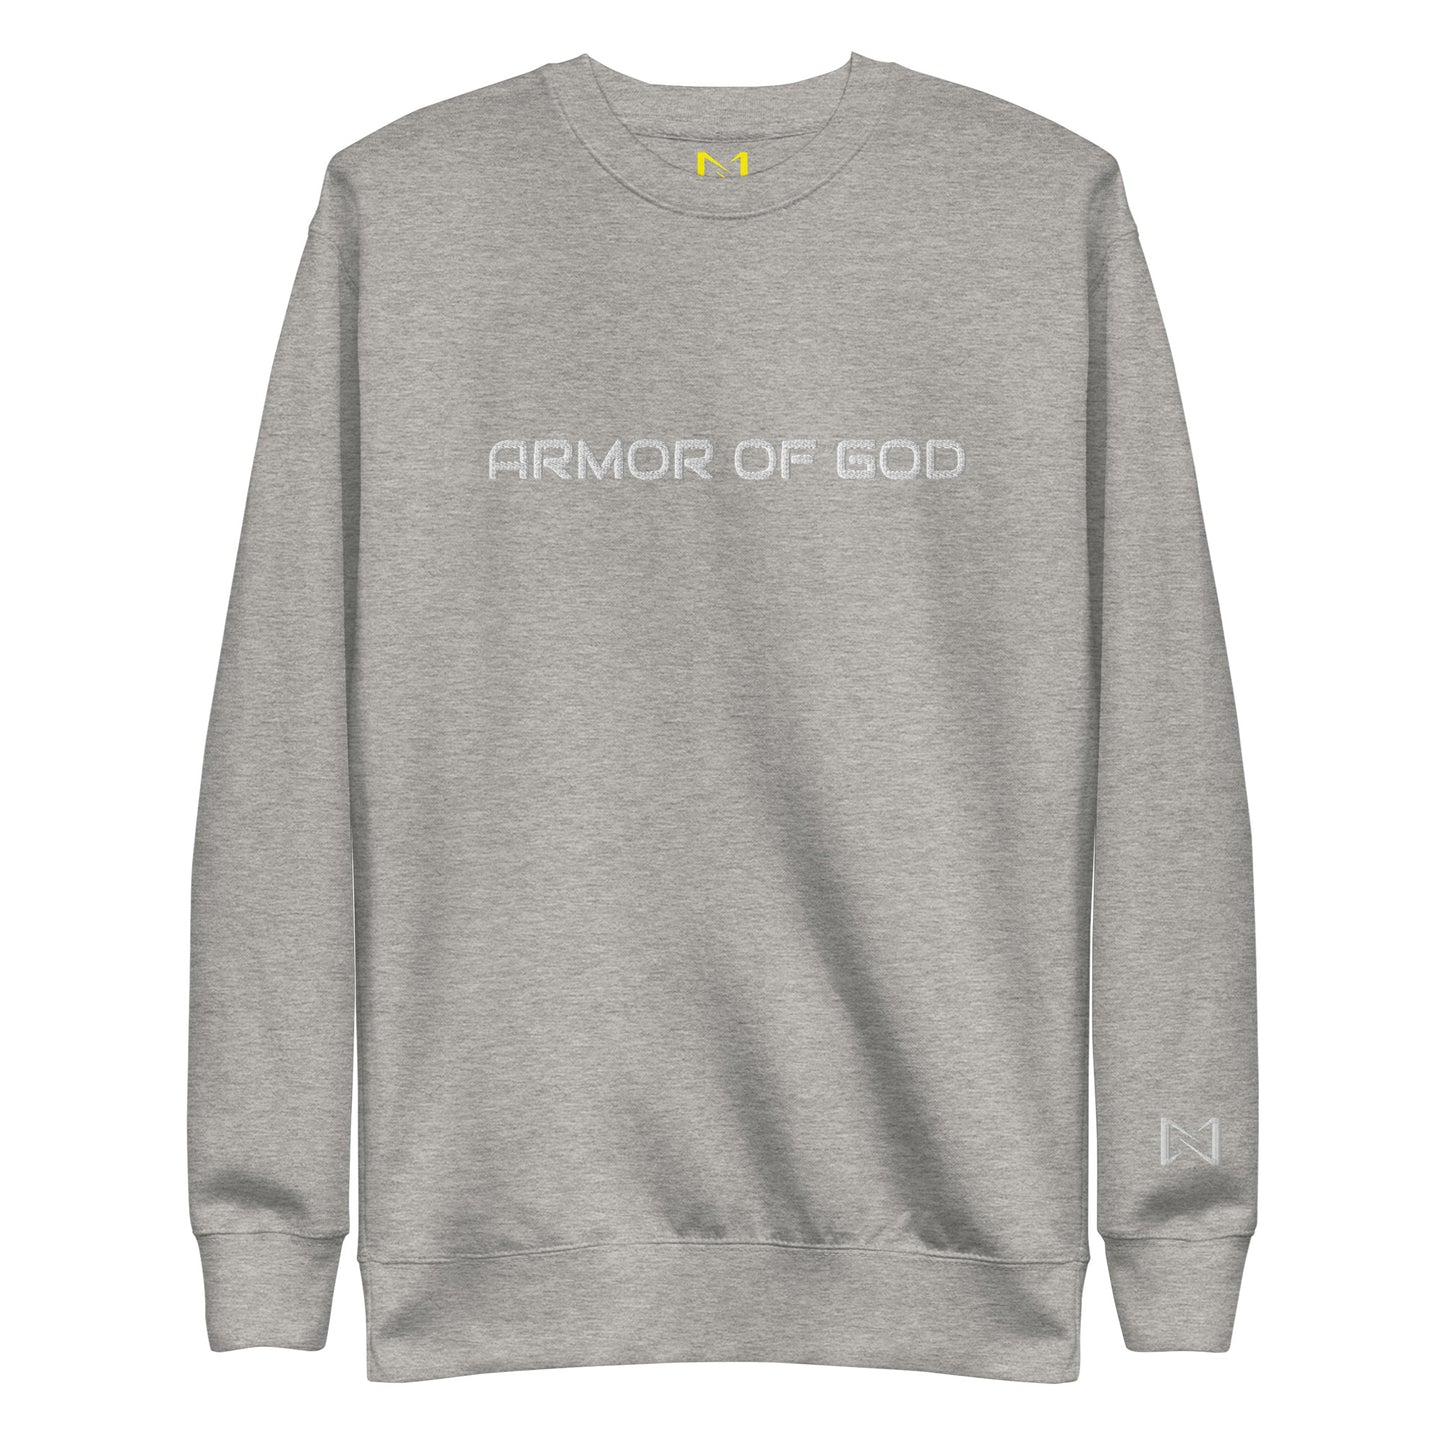 Armor of God Premium Sweatshirt